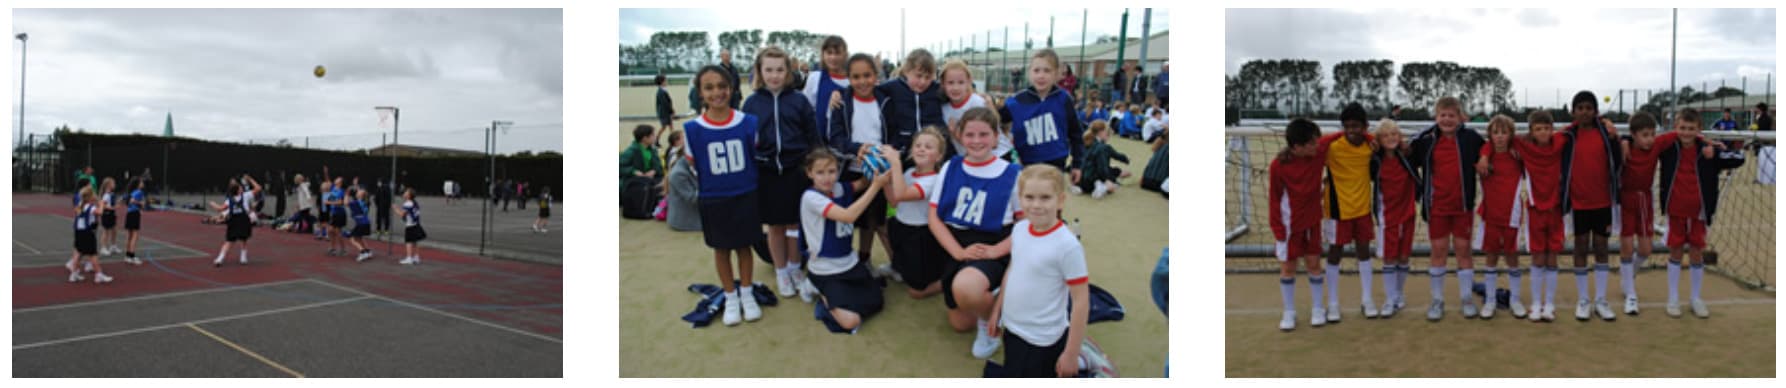 Fairholme Preparatory School: Sporting Success